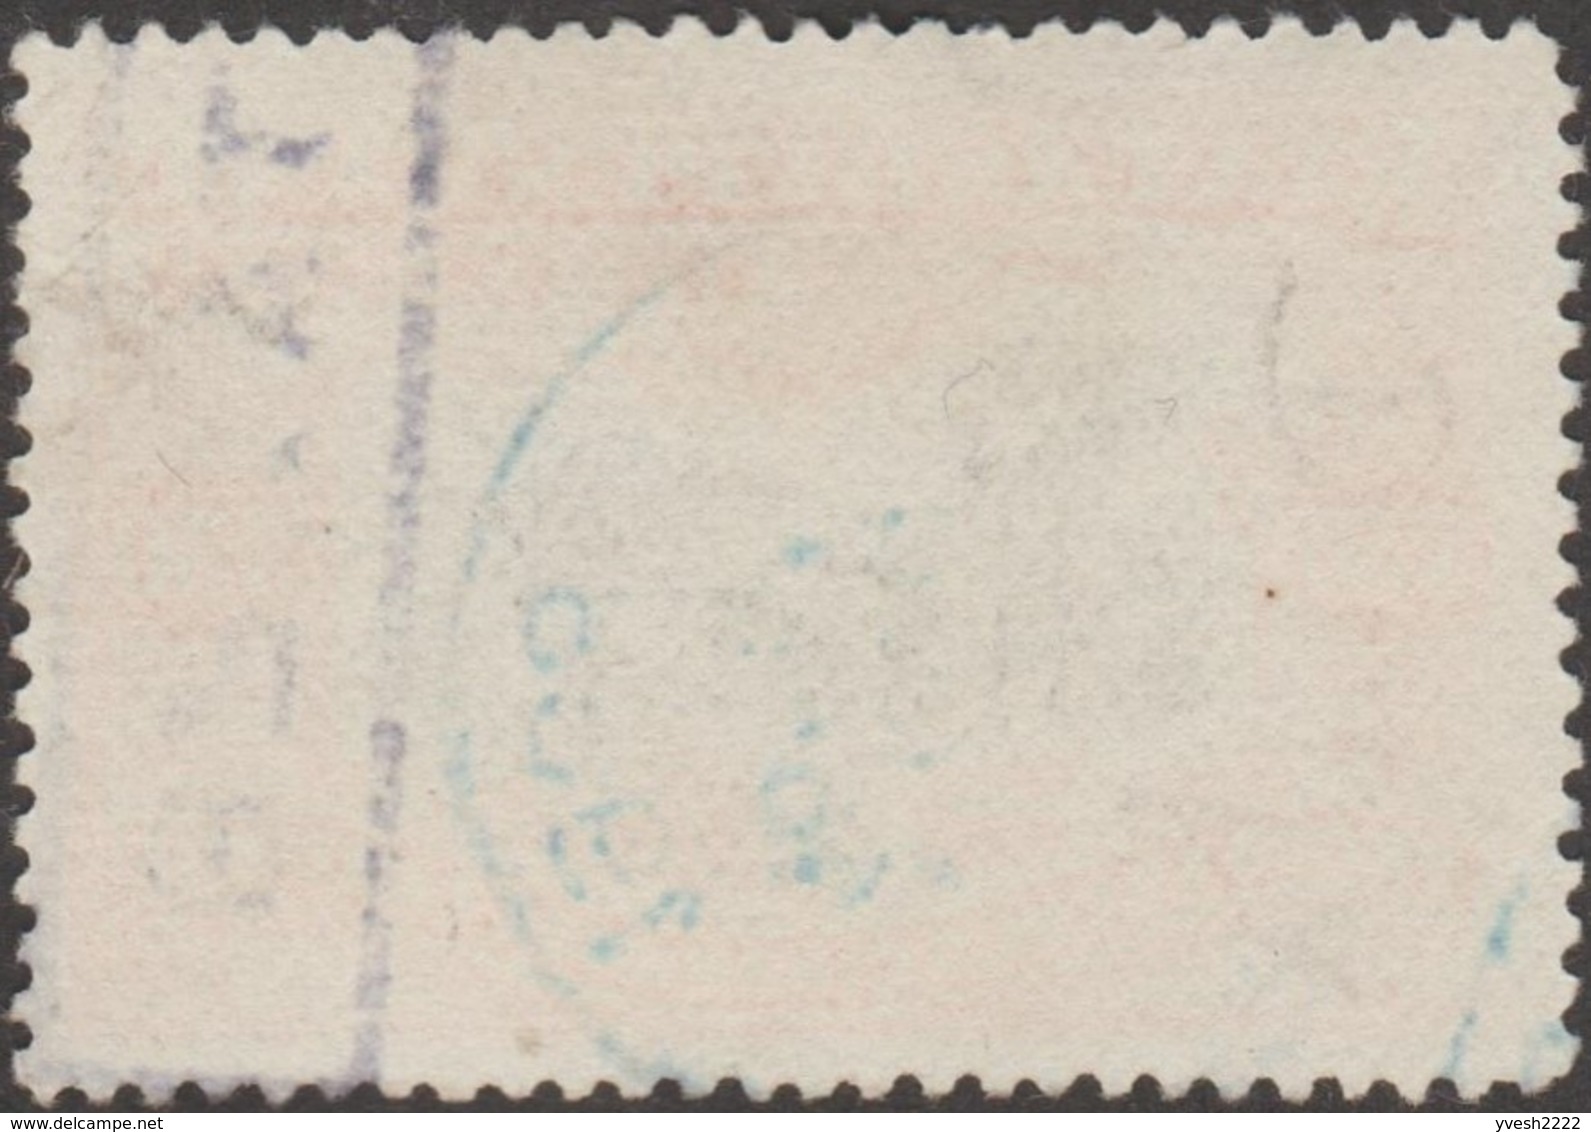 Congo belge 1908 COB Taxe 1 à 6D, superbes et rares